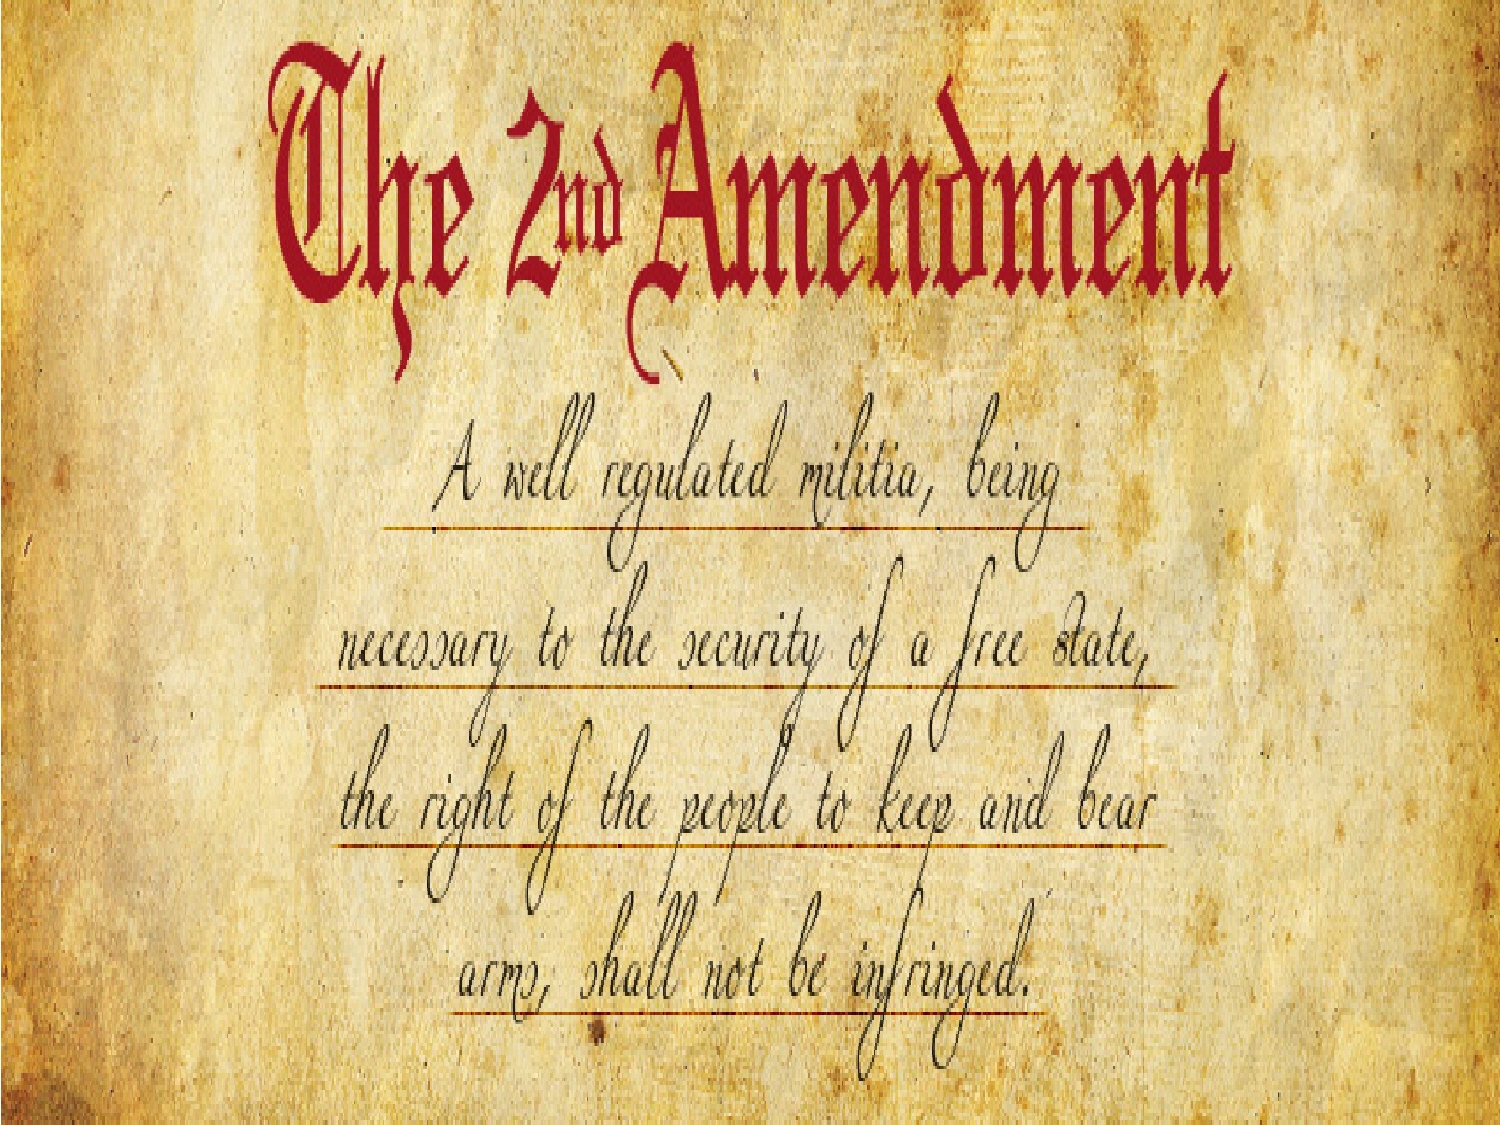 2nd amendment, misc